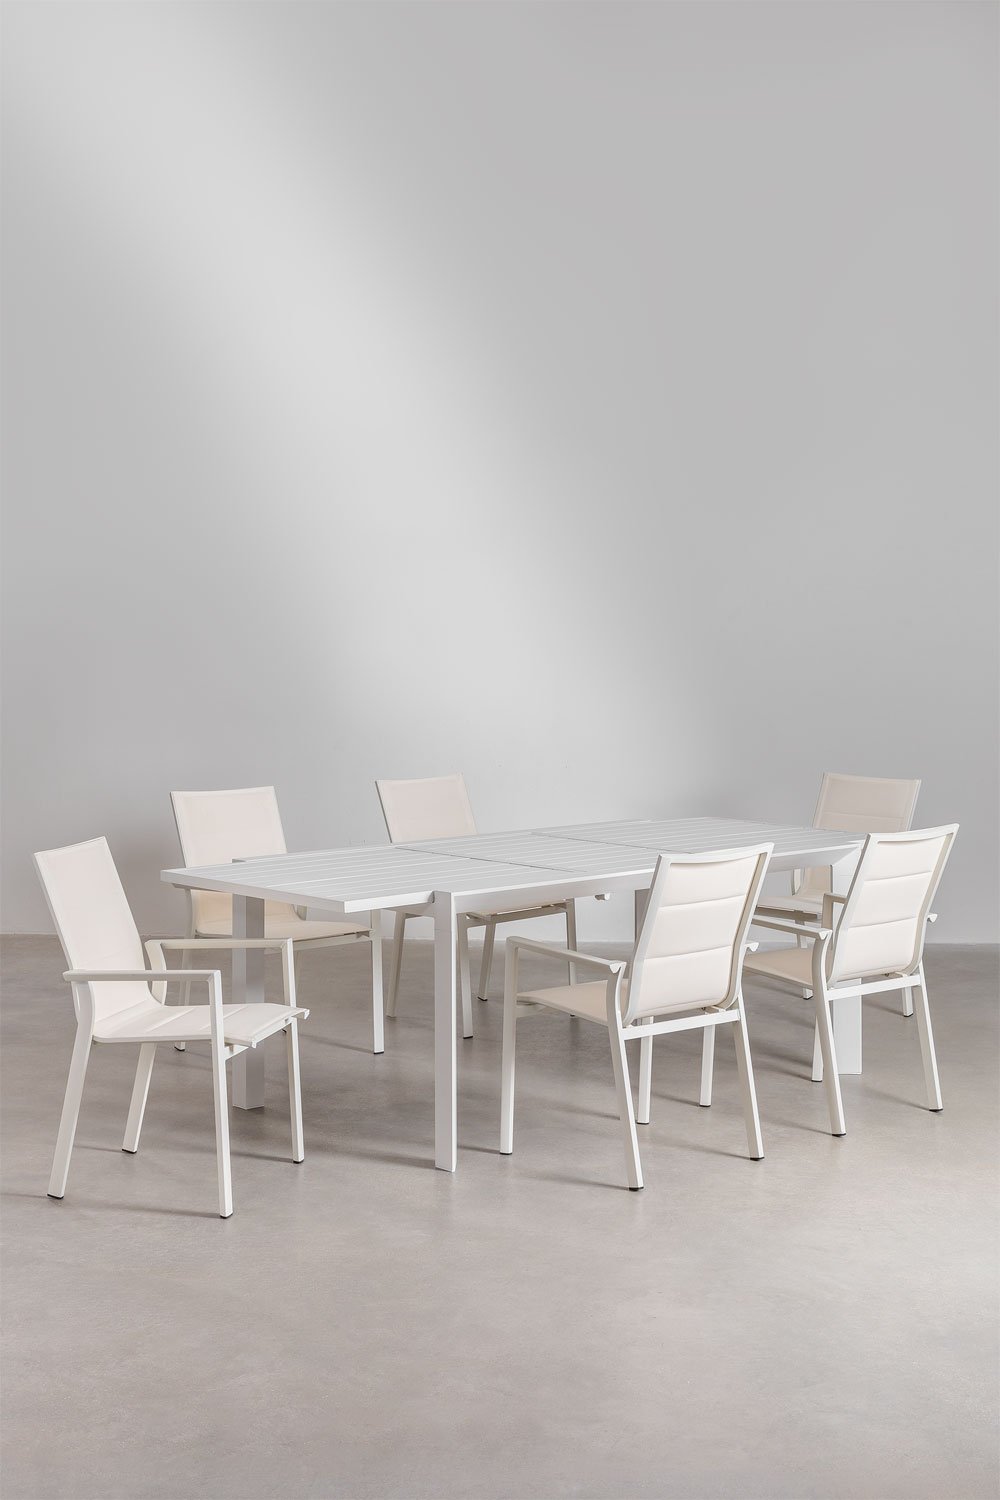 Set aus ausziehbarem rechteckigem Starmi-Aluminiumtisch (180–240 x 100 cm) und 6 stapelbaren Gartenstühlen aus Karena-Aluminium, Galeriebild 1